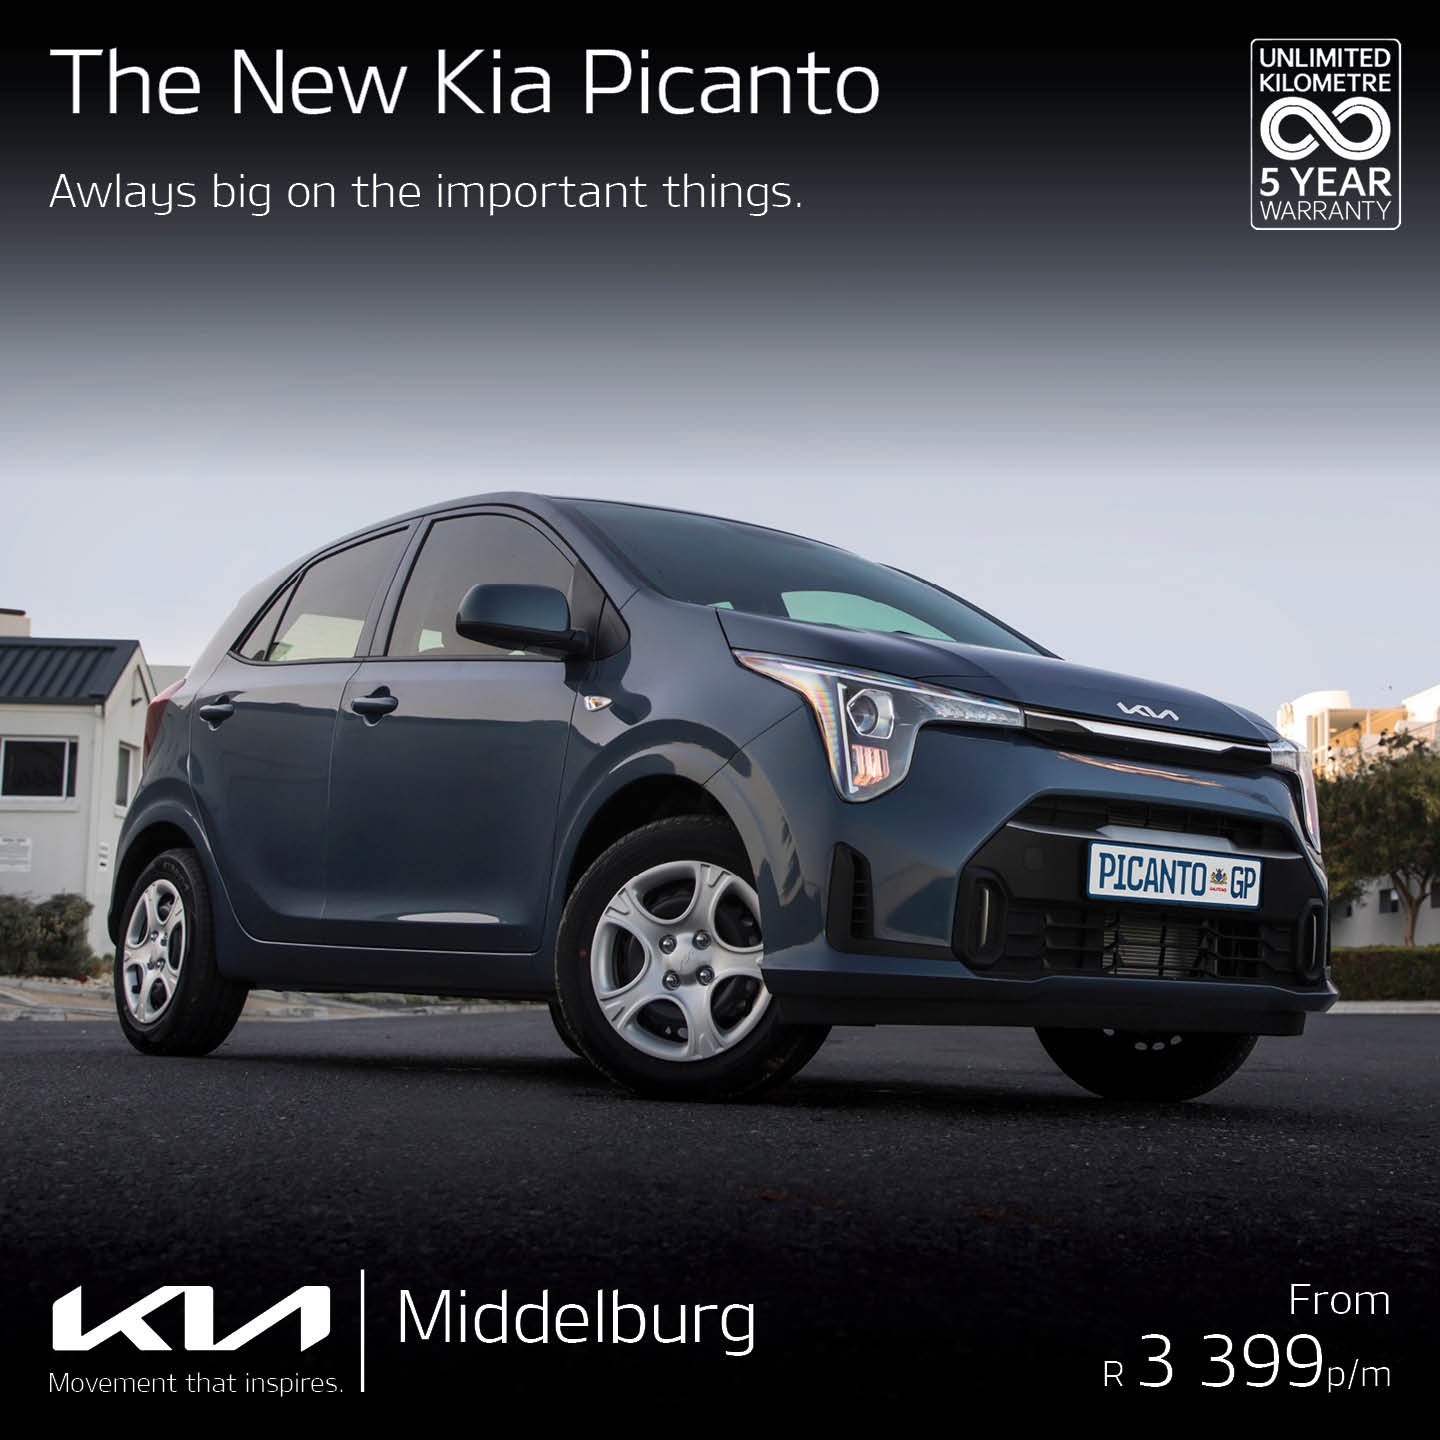 New KIA Picanto image from Eastvaal Motors